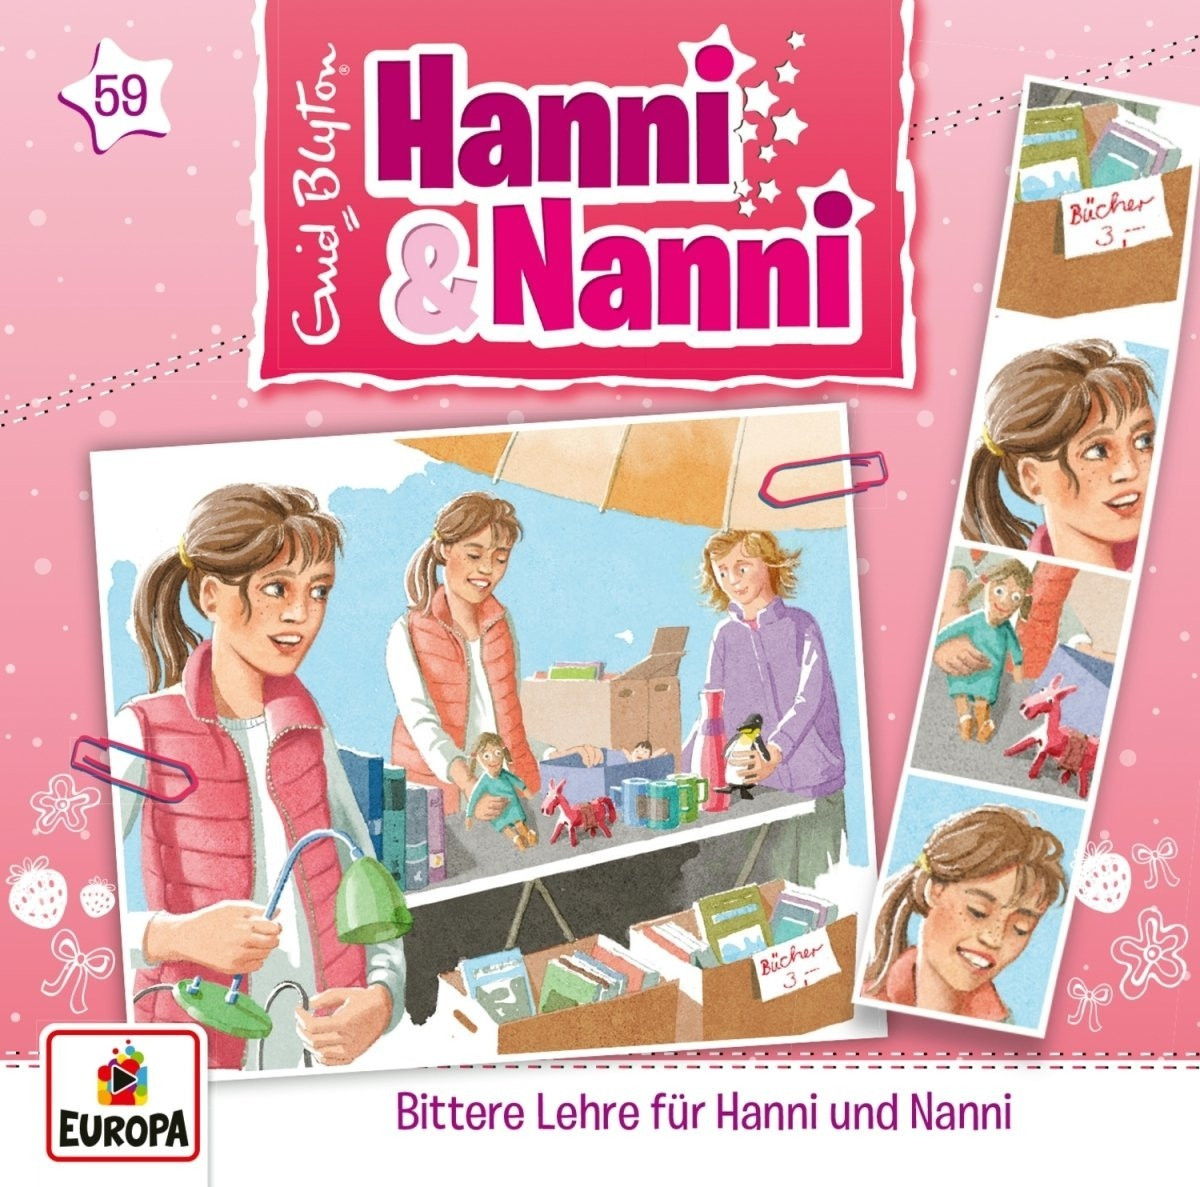 Hanni und Nanni Folge 59 Bittere Lehre Für Hanni und Nanni